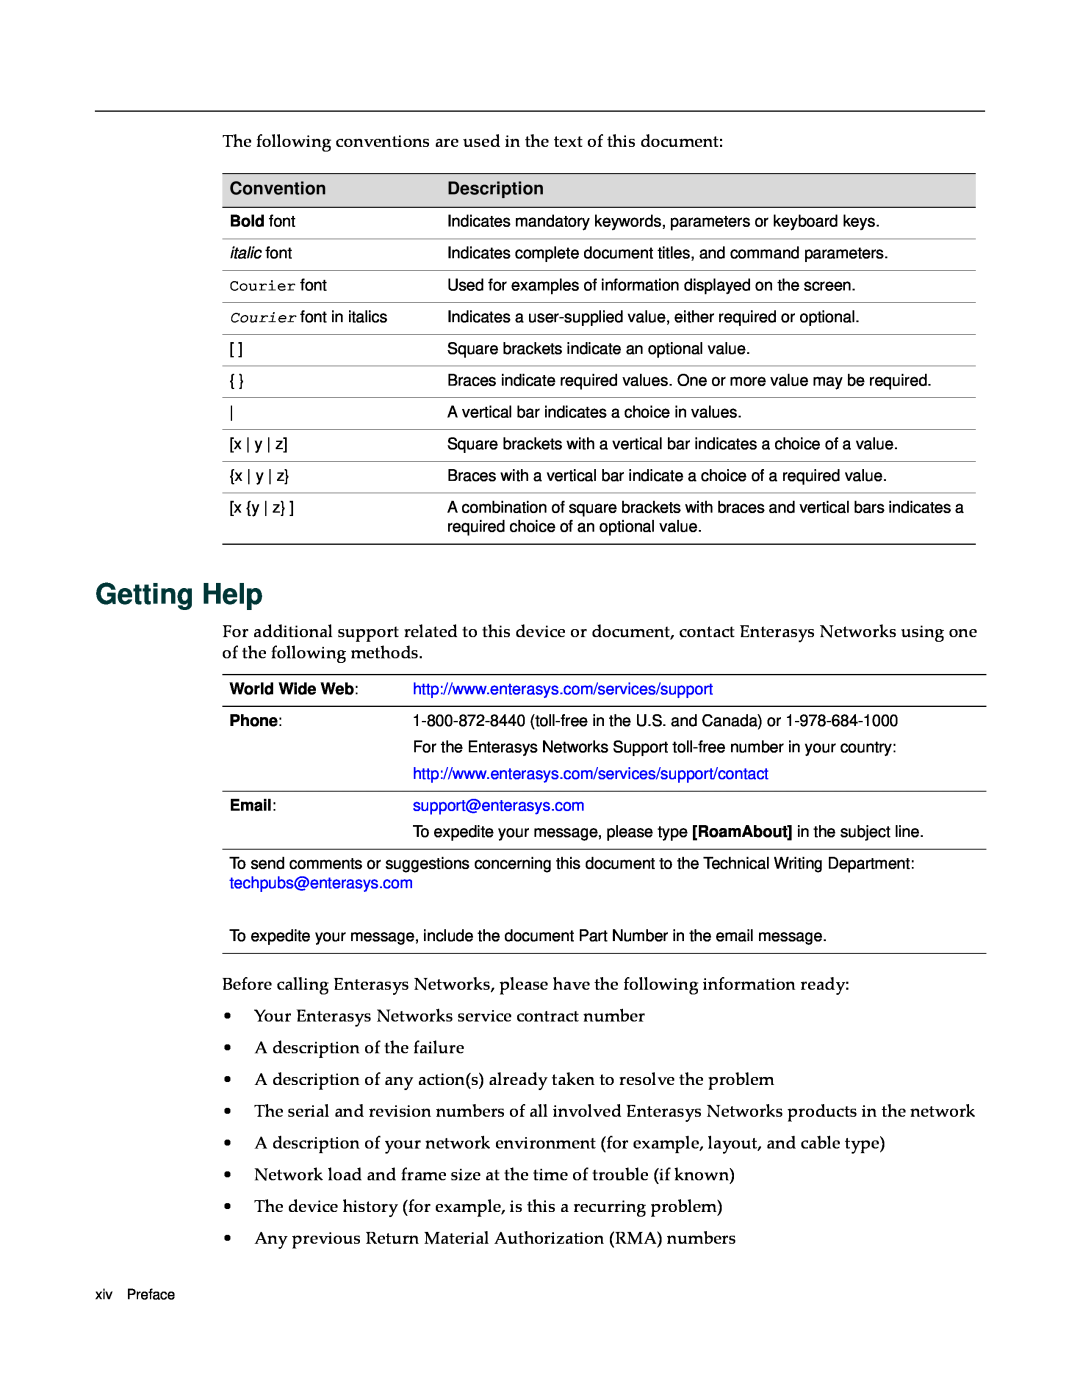 Enterasys Networks RBT-4102 manual Getting Help, Convention, Description 